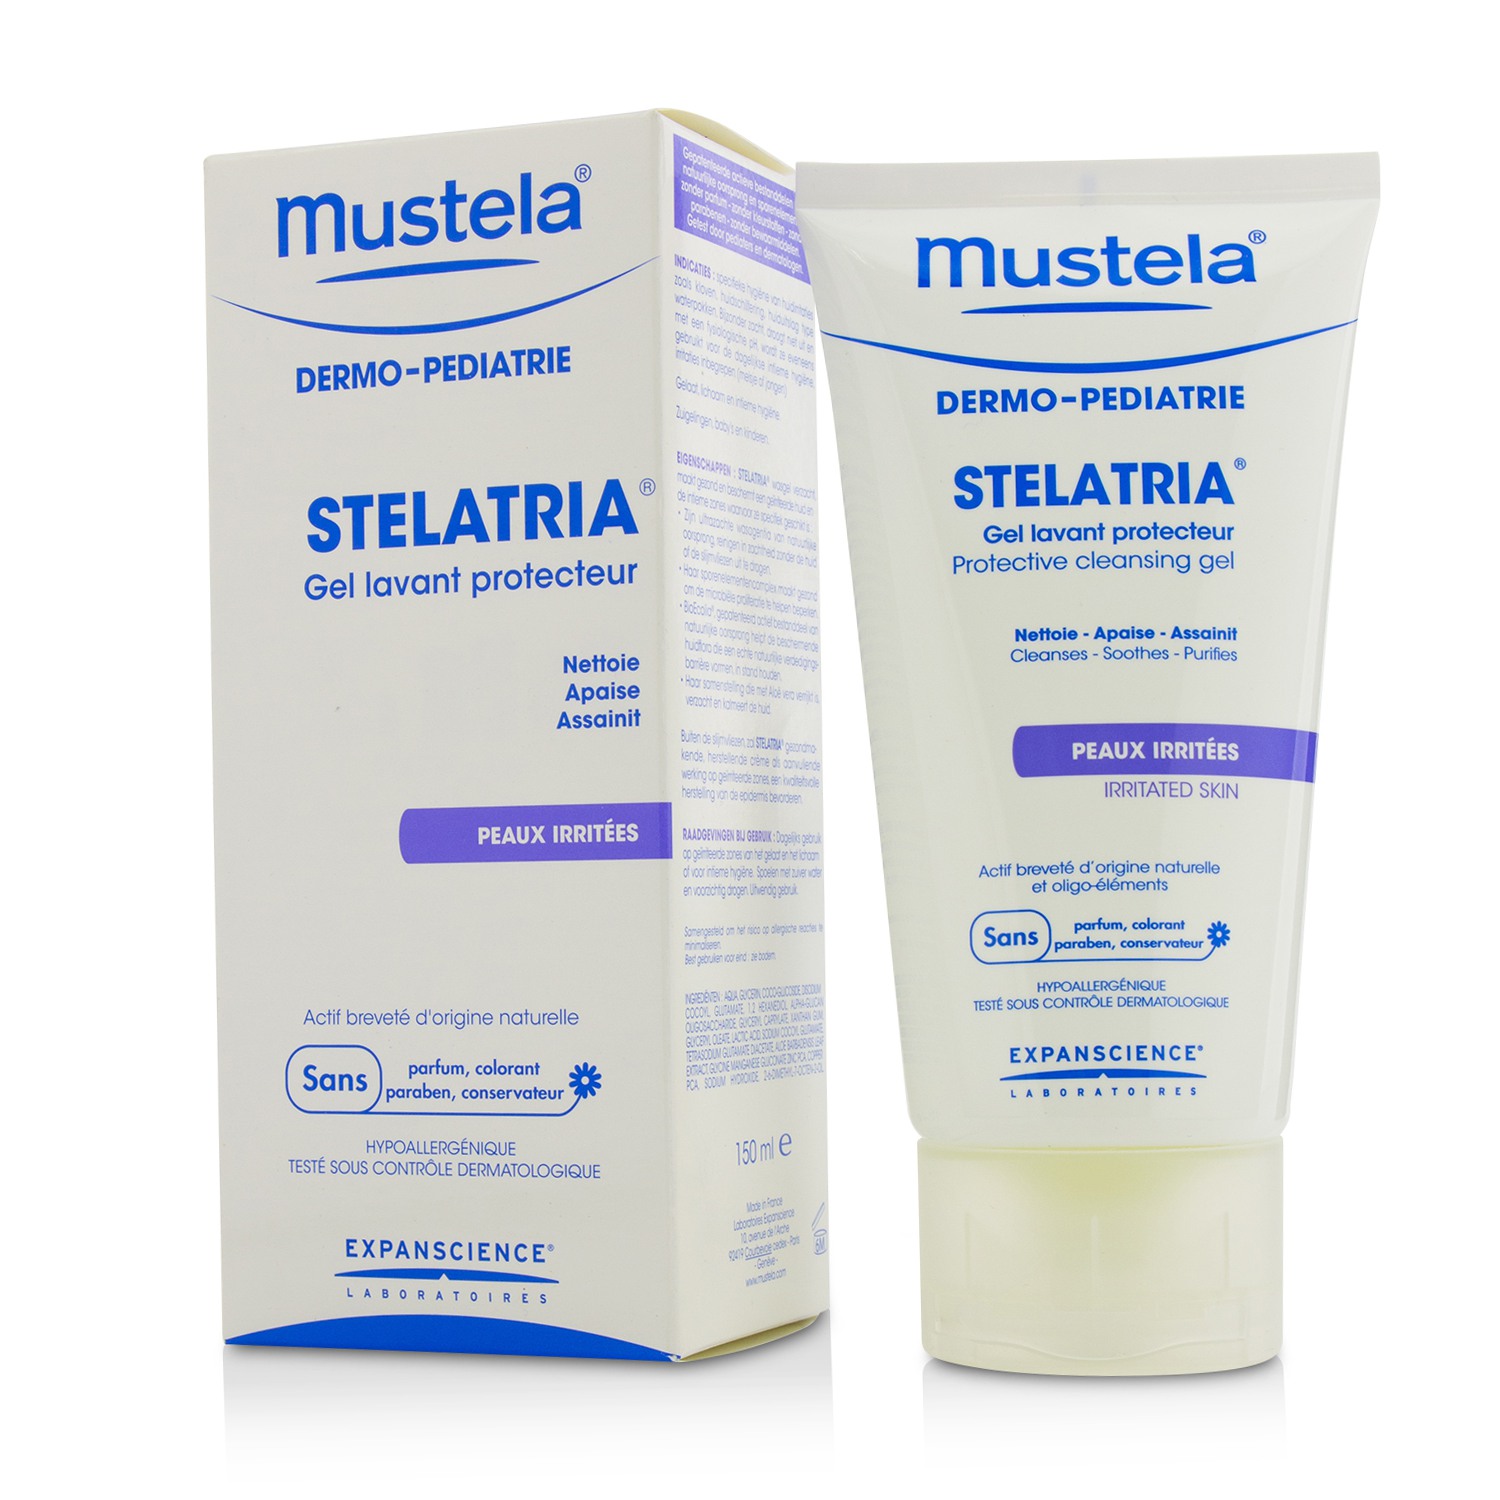 Stelatria Protective Cleansing Gel - For Irritated Skin Mustela Image